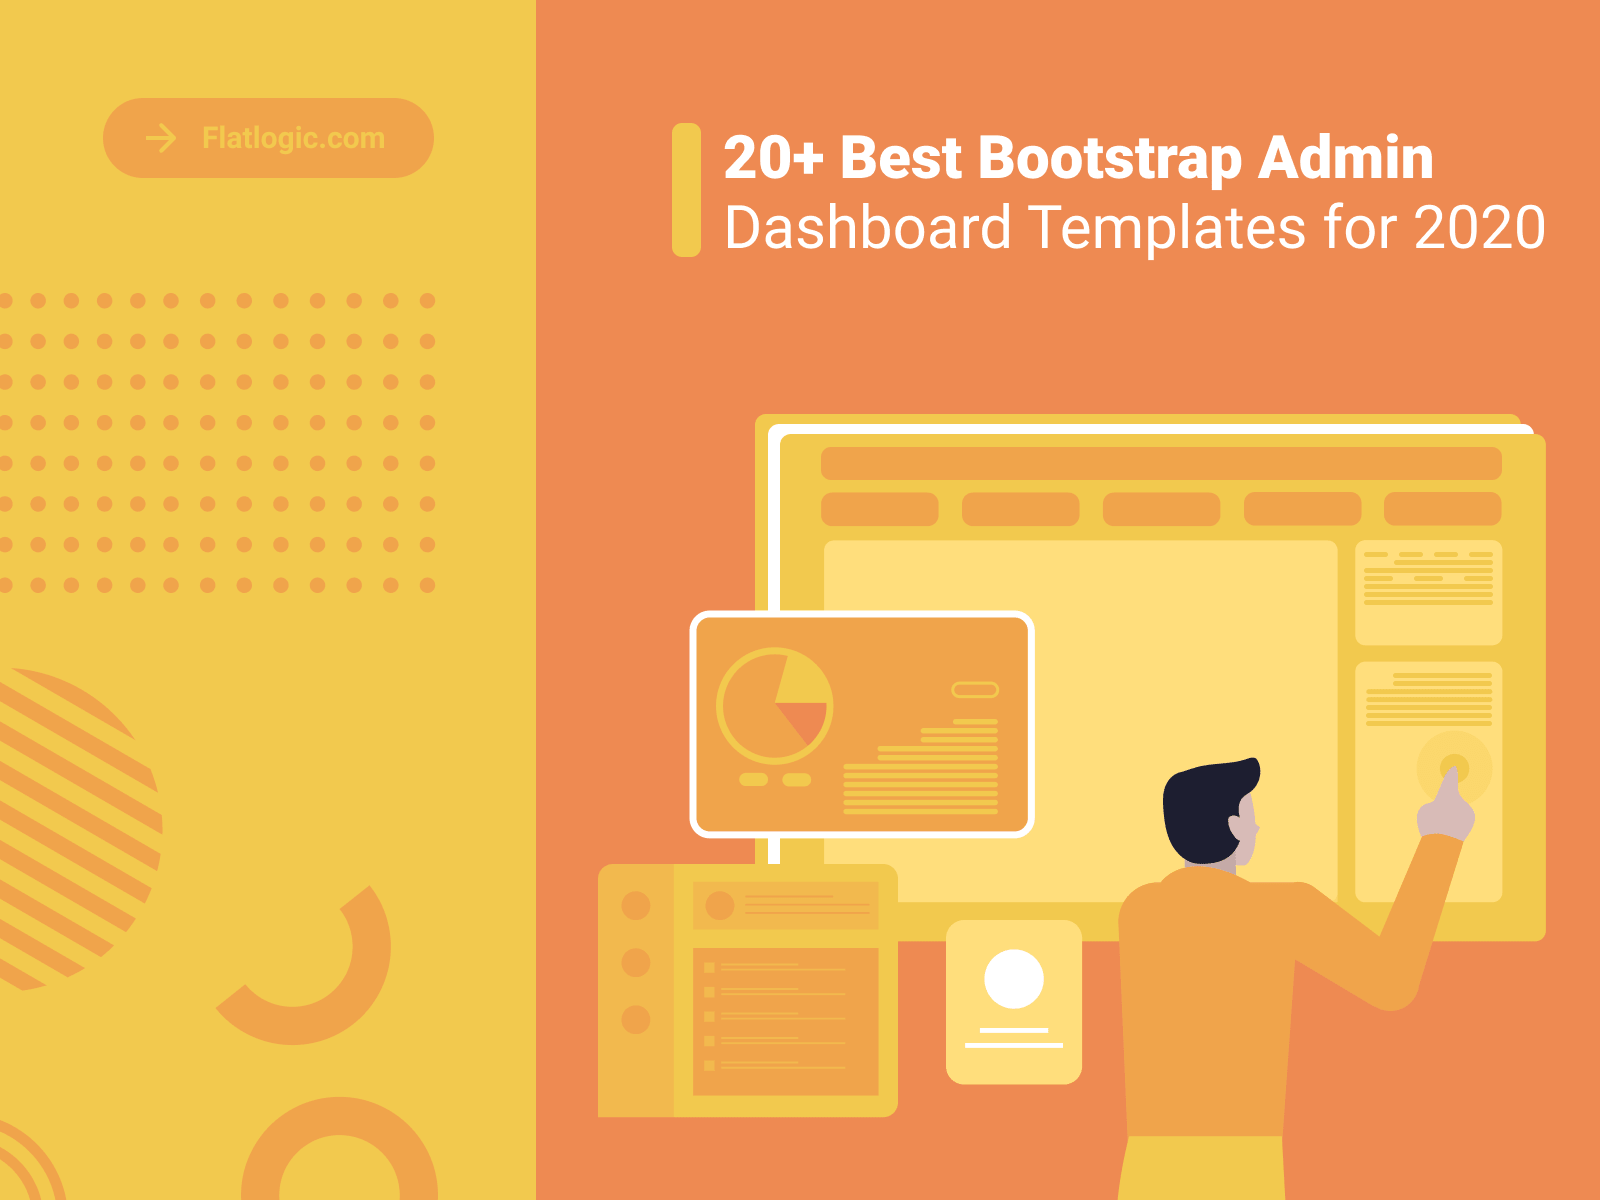 20+ Bootstrap Admin Dashboard Templates for 2020 - Flatlogic Blog